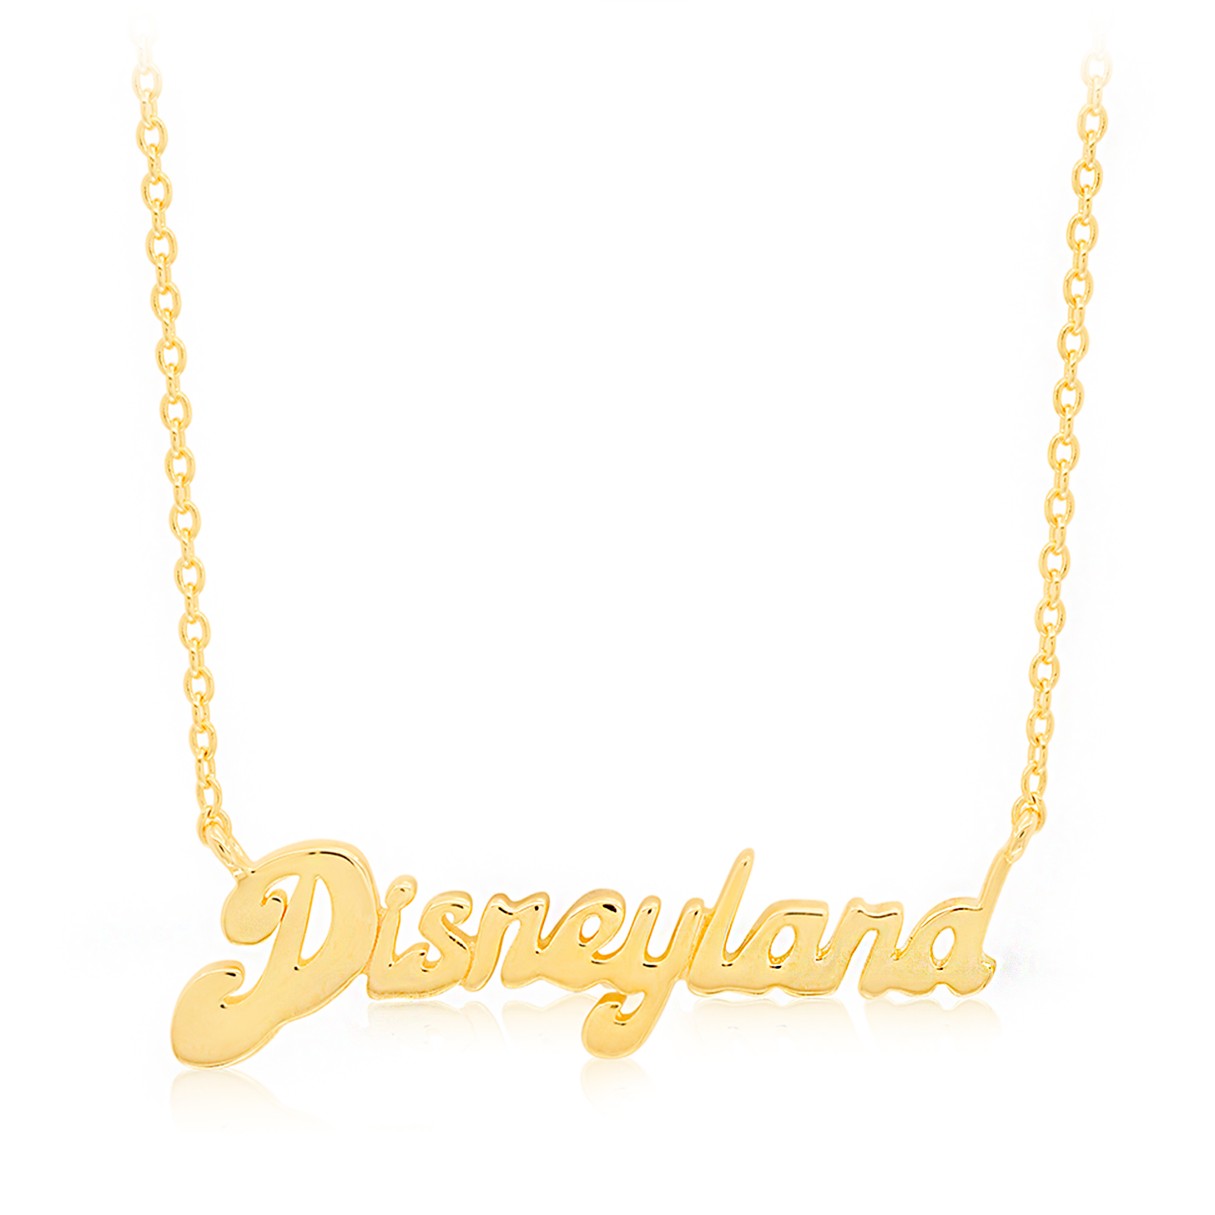 Disneyland Yellow Gold Necklace by CRISLU